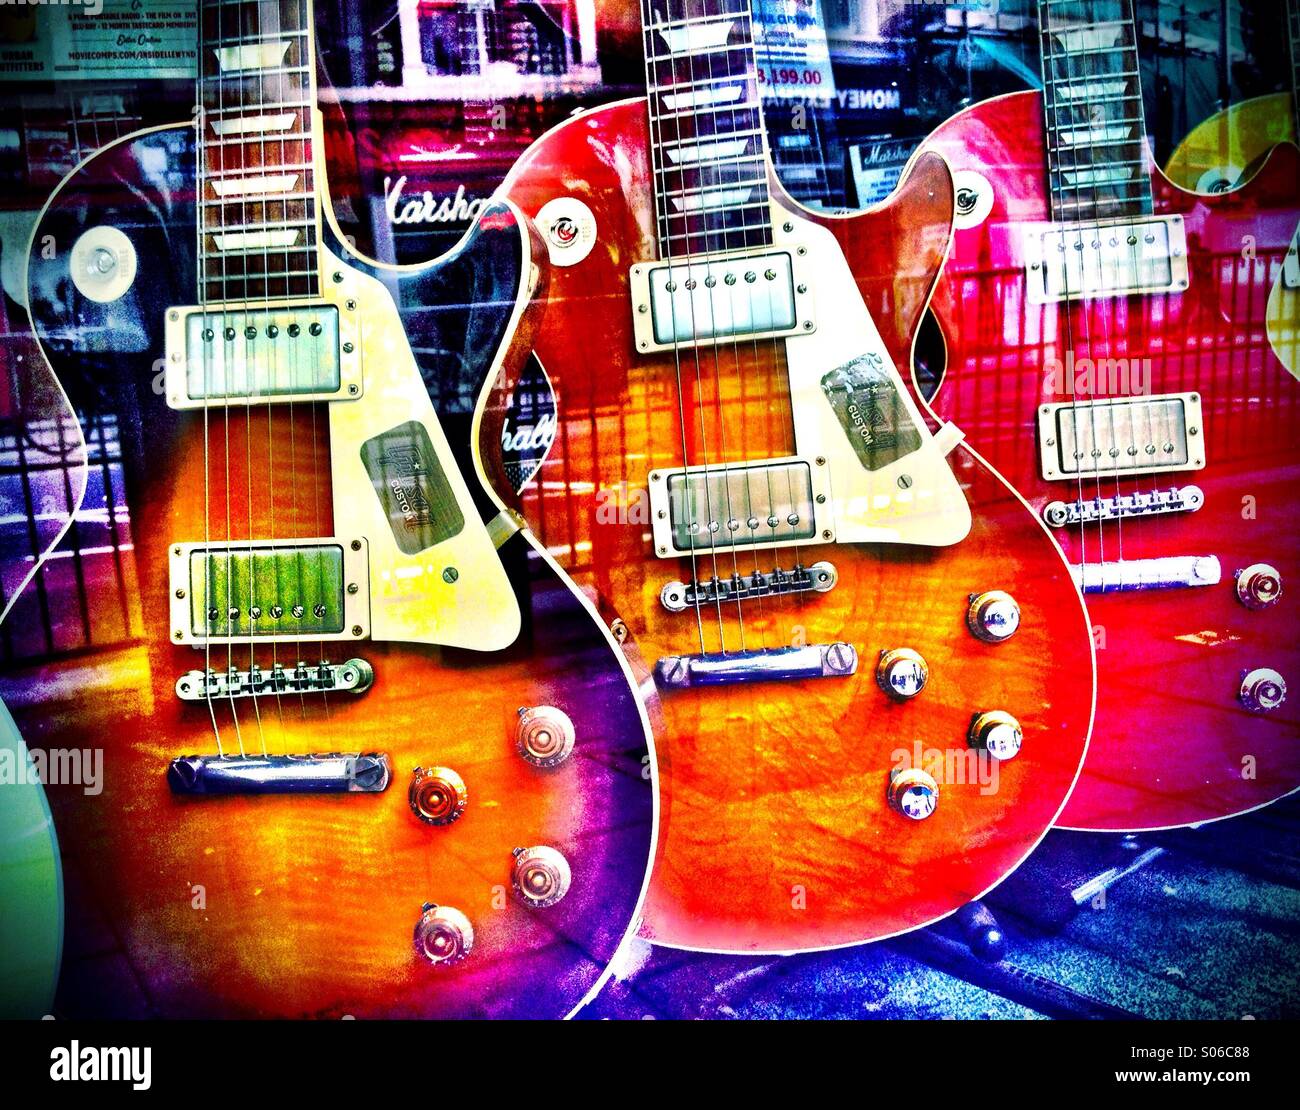 Les Paul Guitars in a shop window Stock Photo